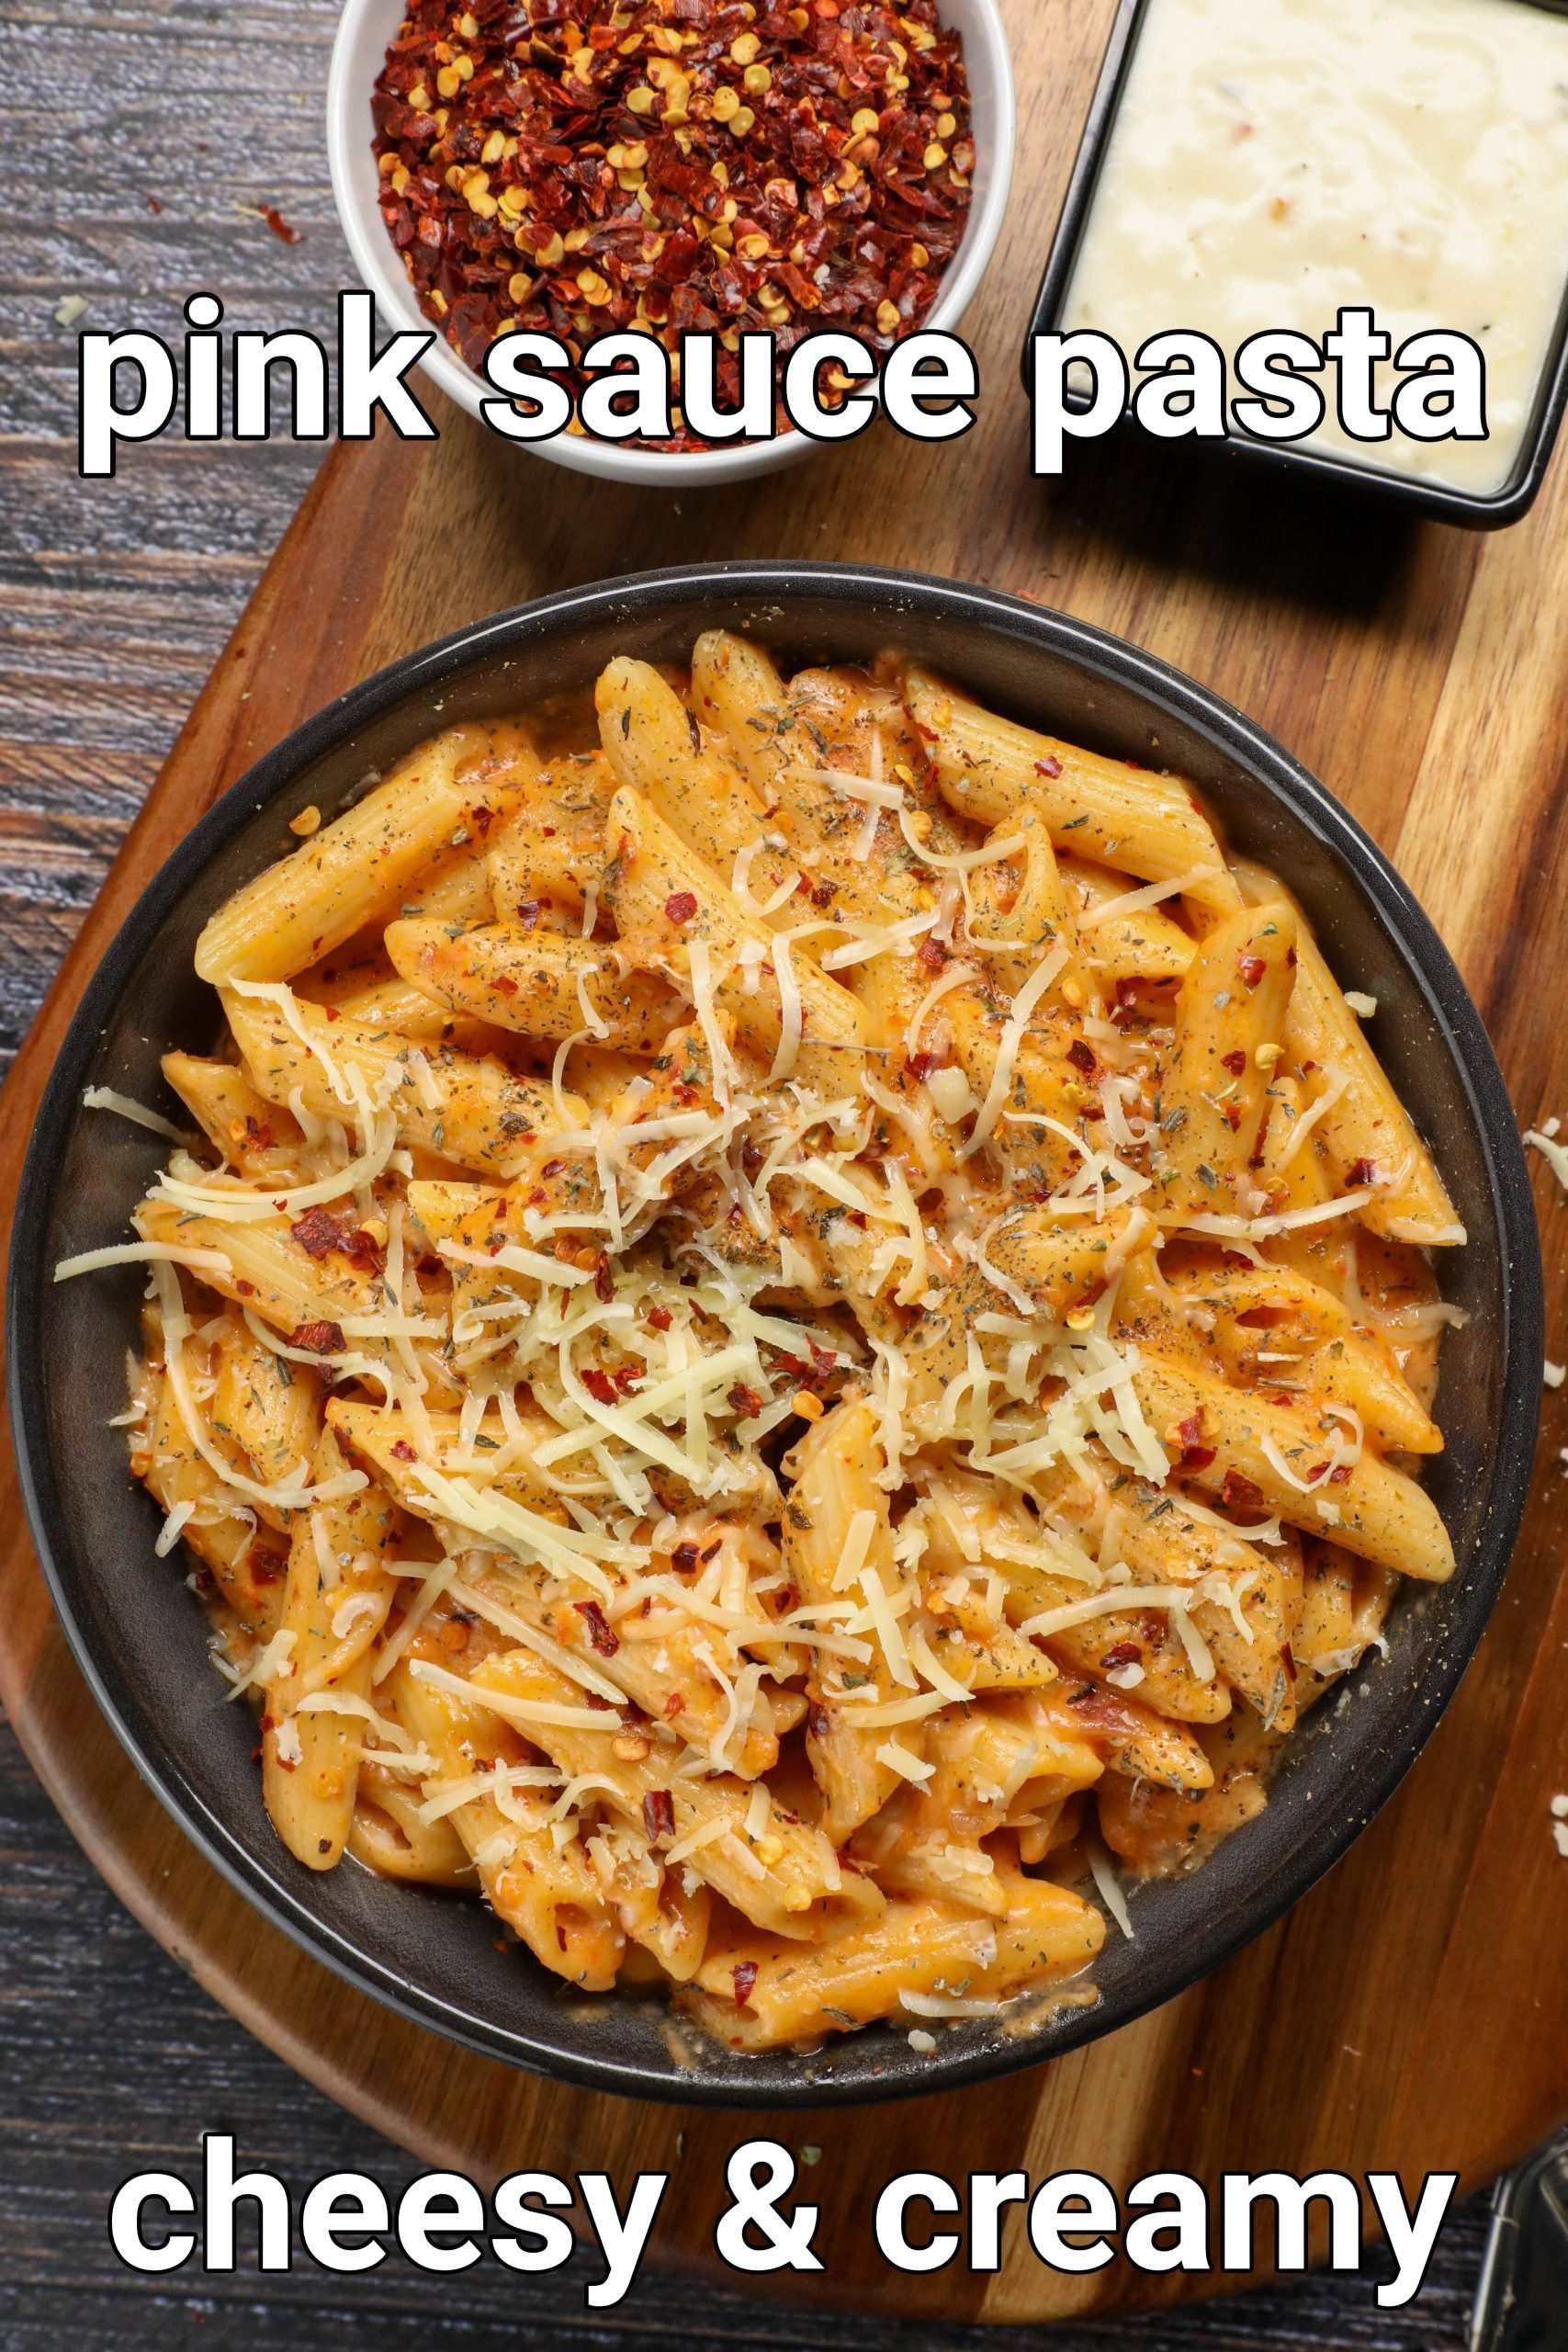 https://hebbarskitchen.com/wp-content/uploads/2021/04/pink-sauce-pasta-recipe-best-rose-pasta-creamy-pasta-recipe-1-scaled.jpeg